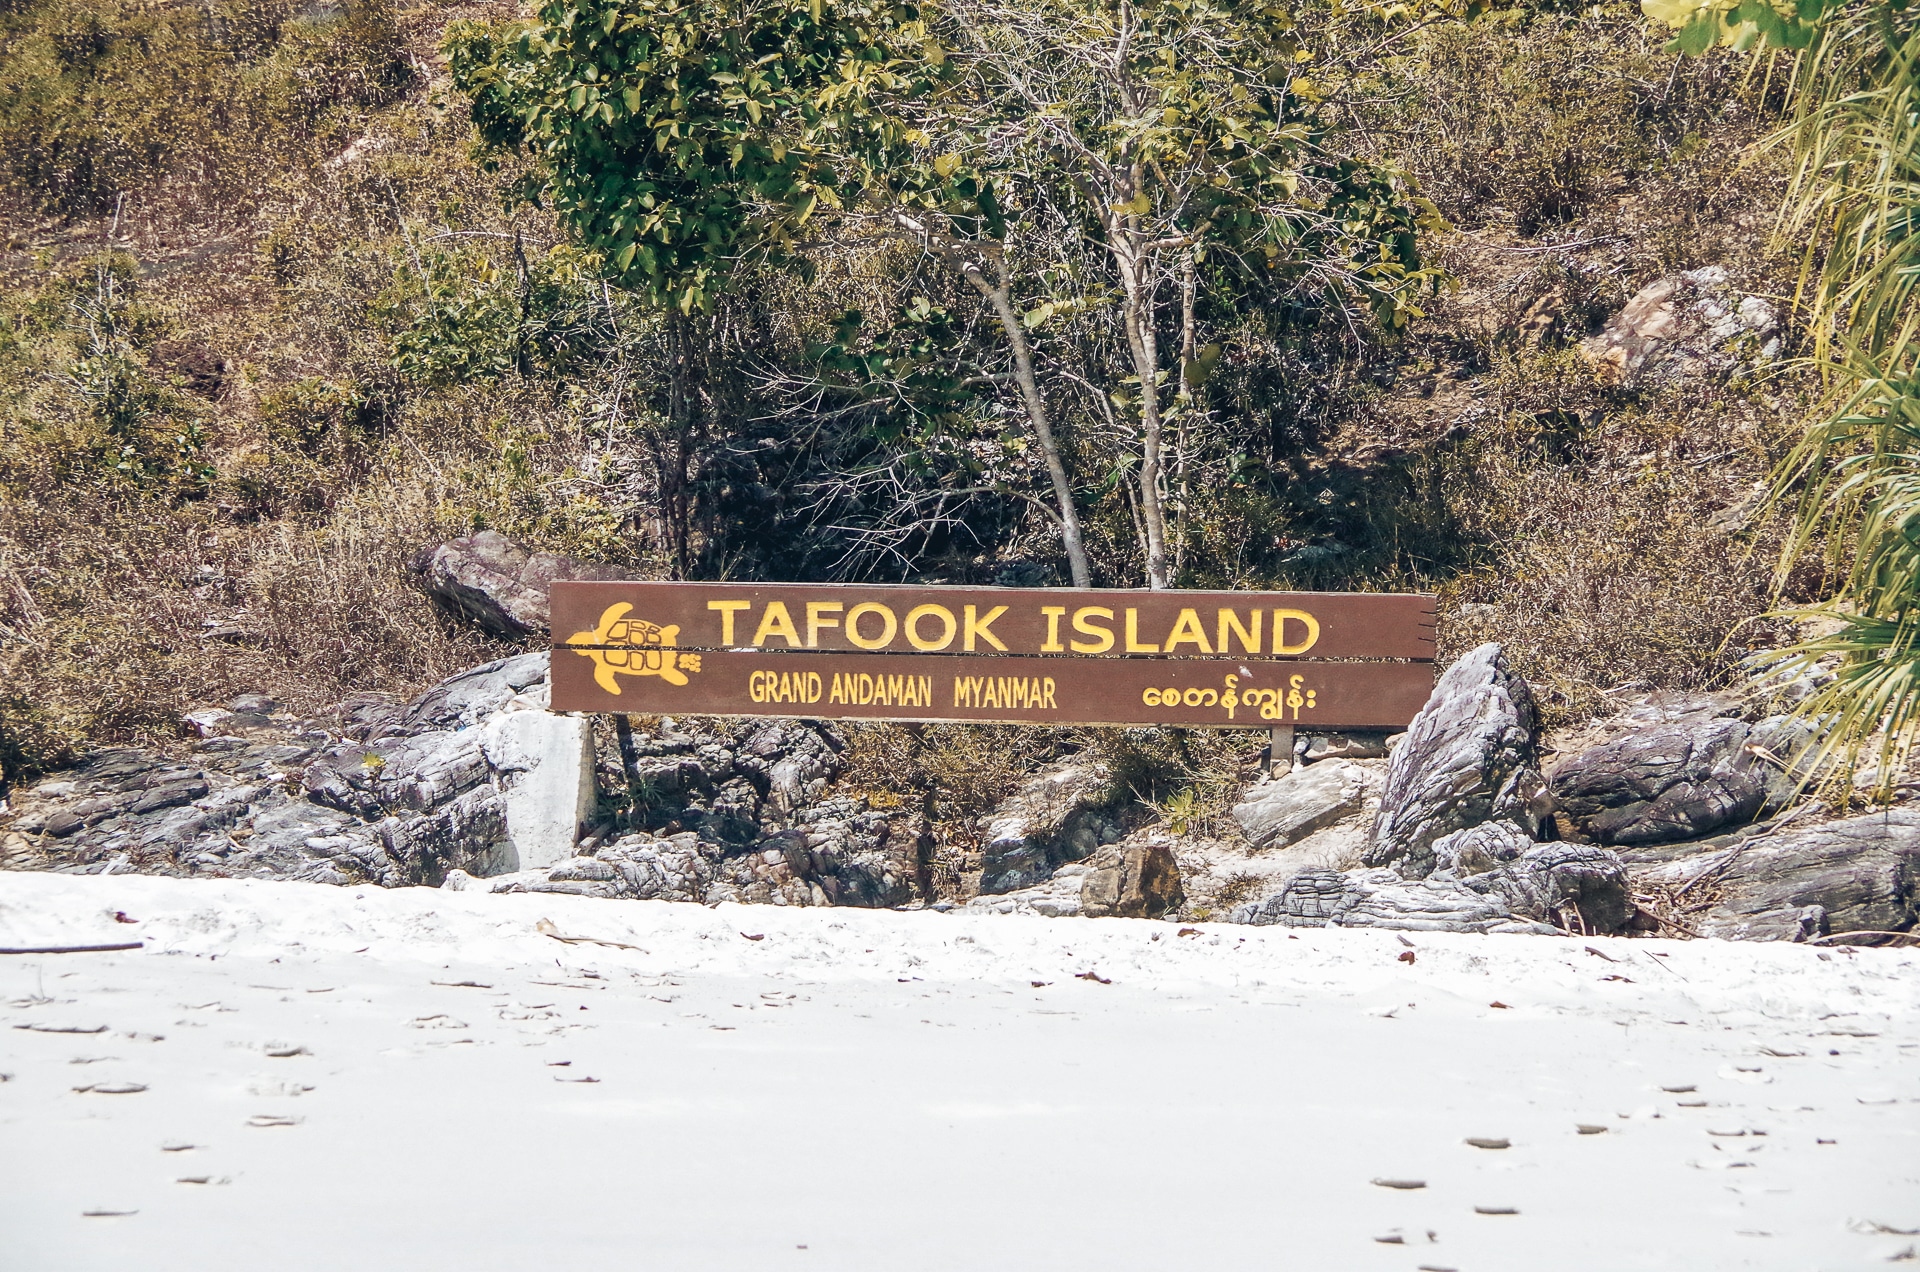 panneau indiquant Tafook island Kawthaung